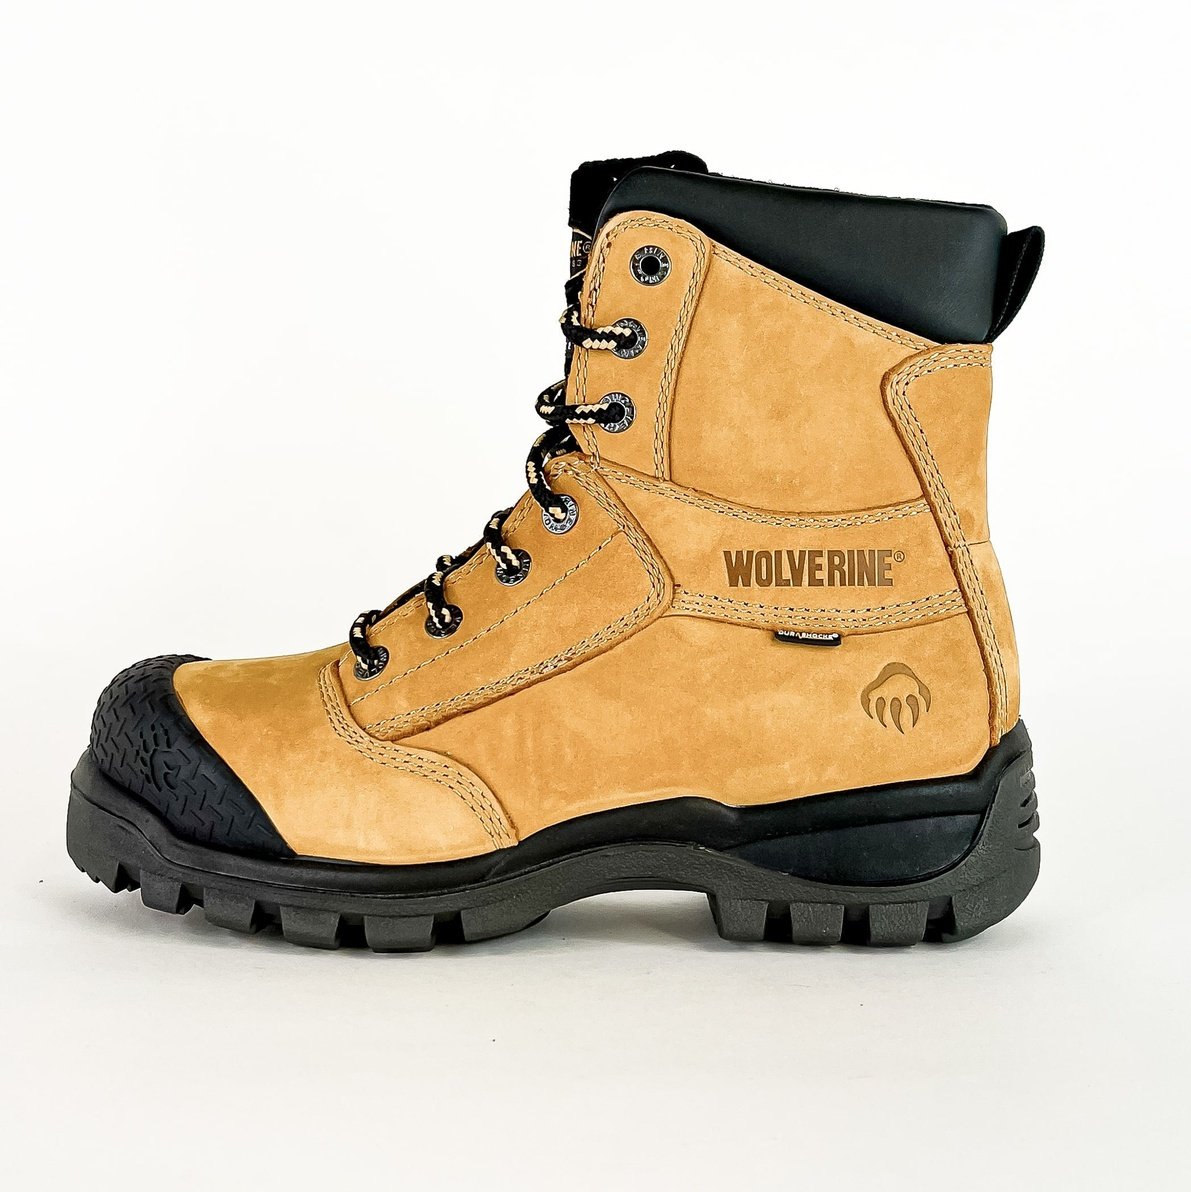 Wolverine Men's Work Boots 8" CSA Rockridge Comp Toe Insulated Choc/Wheat - Wolverine Boots